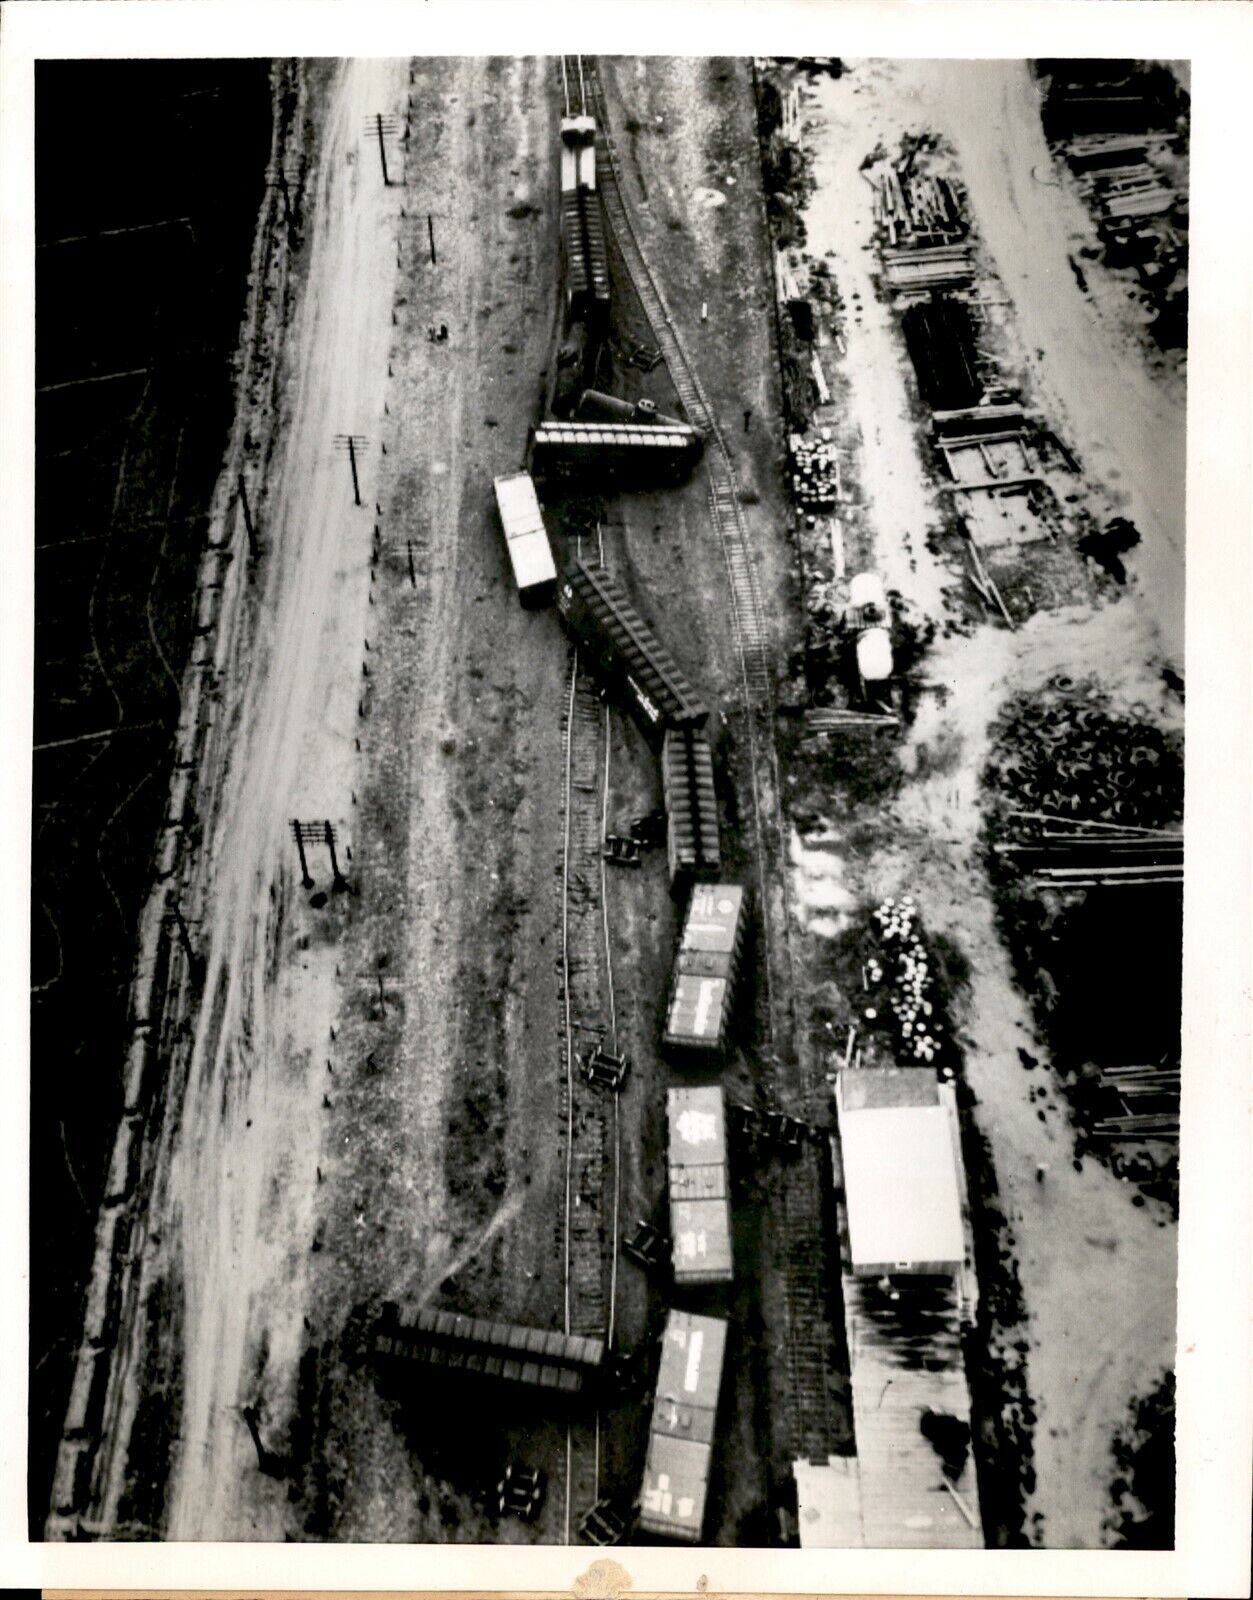 GA149 1953 Orig United Press Photo HEAT CAUSES TRAIN DERAILMENT GARDEN CITY KS